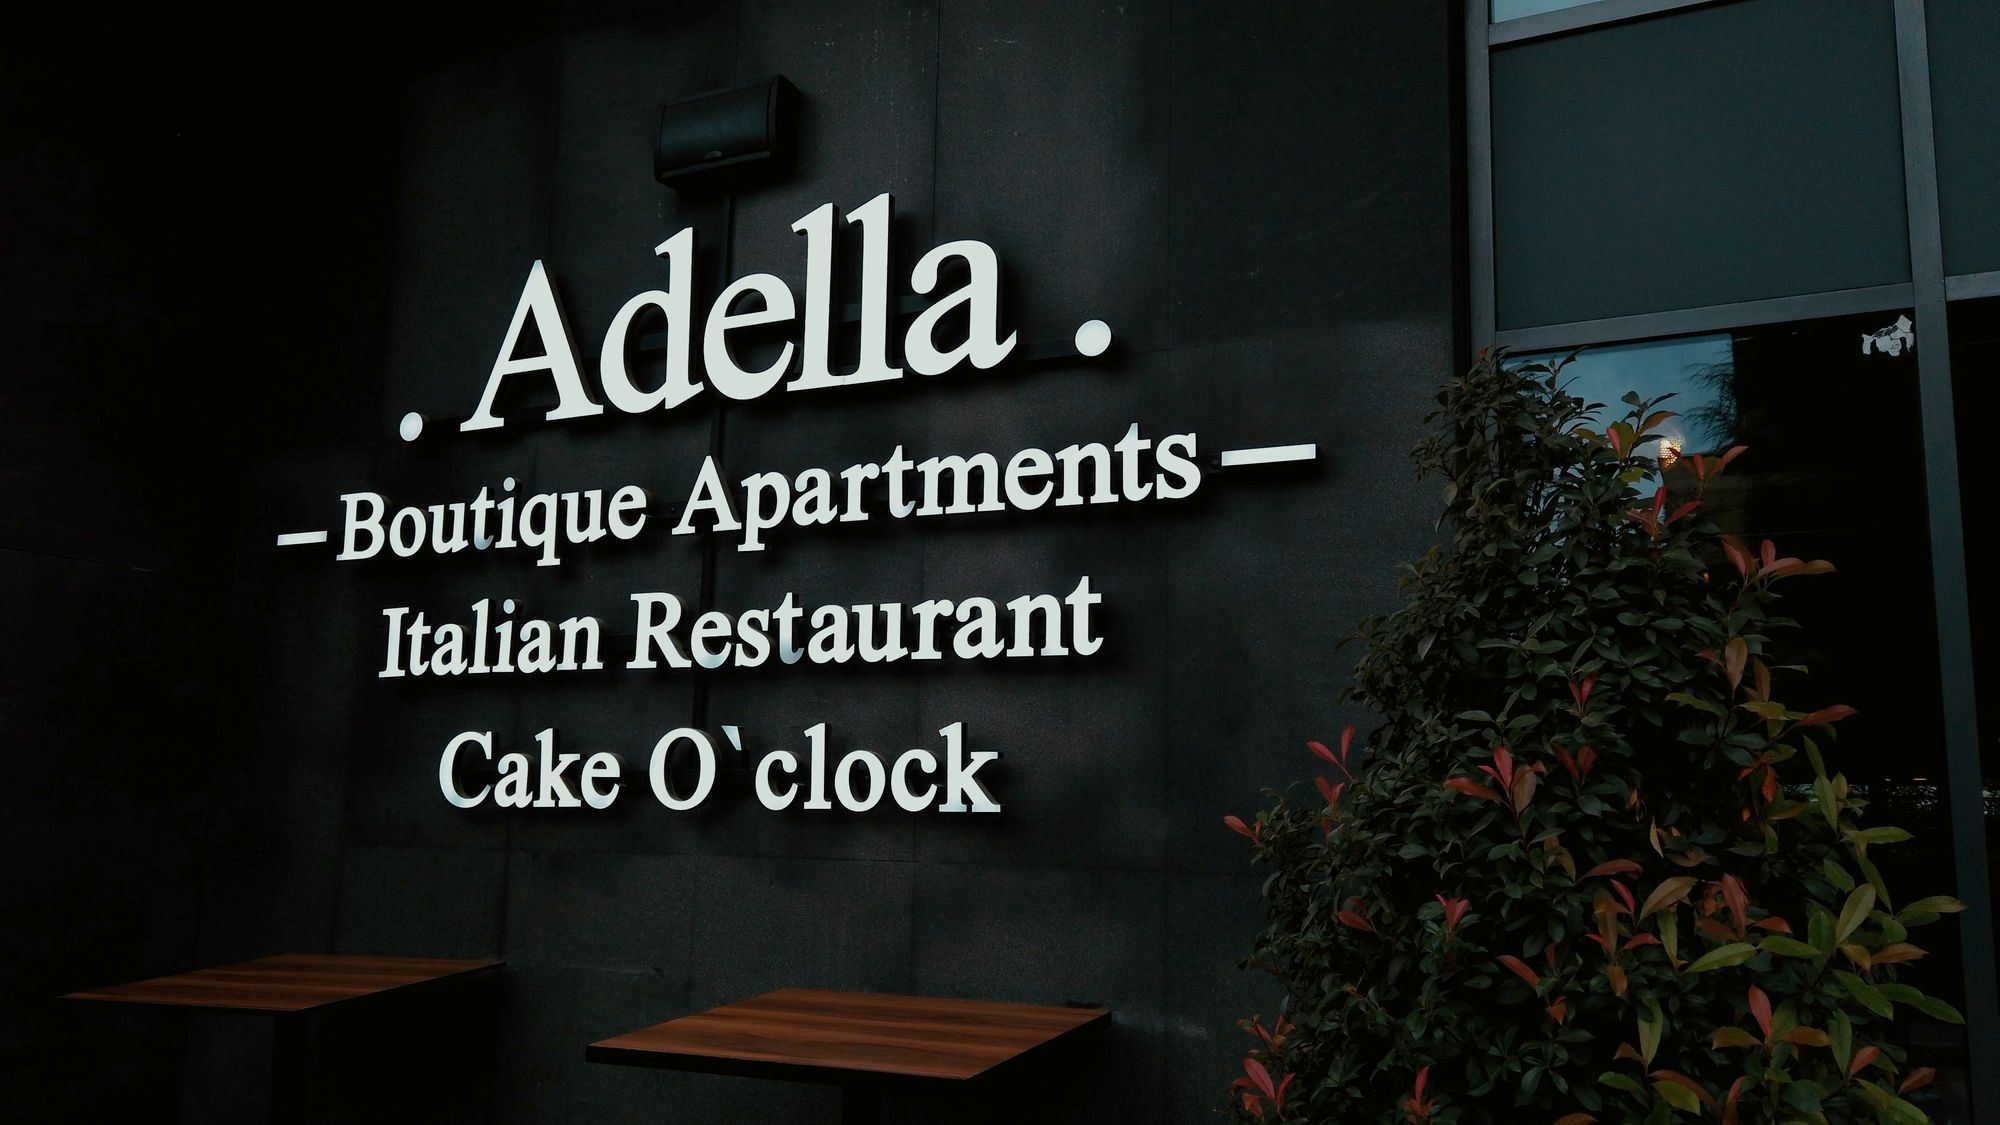 Unique Adella Boutique Apartments Ideas in 2022